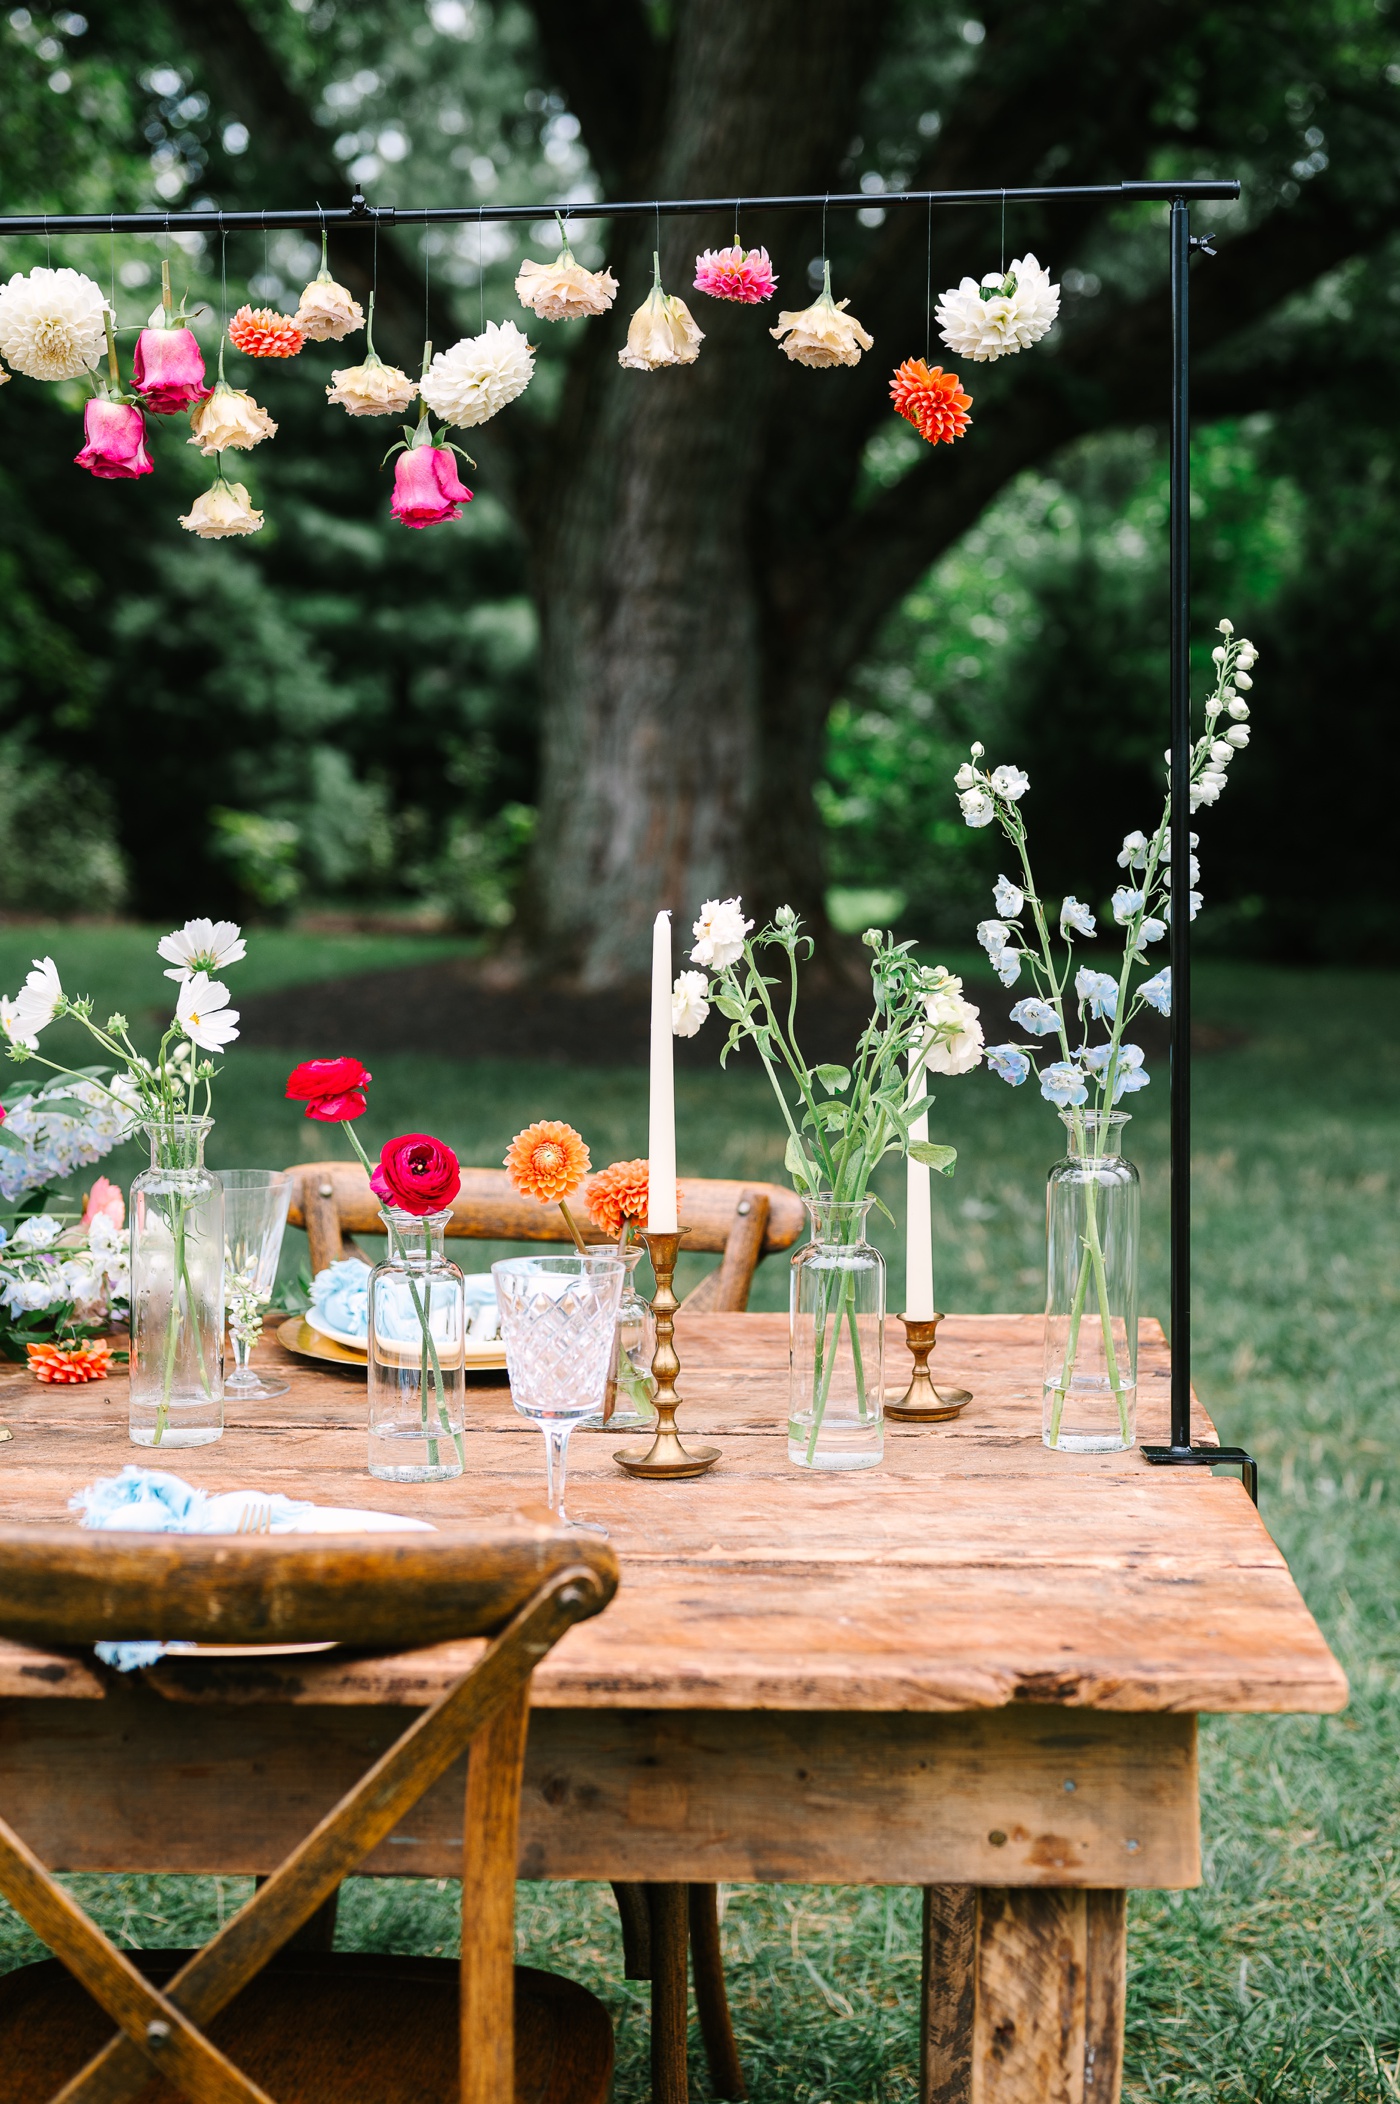 Garden party wedding inspiration at Mustard Seed Gardens